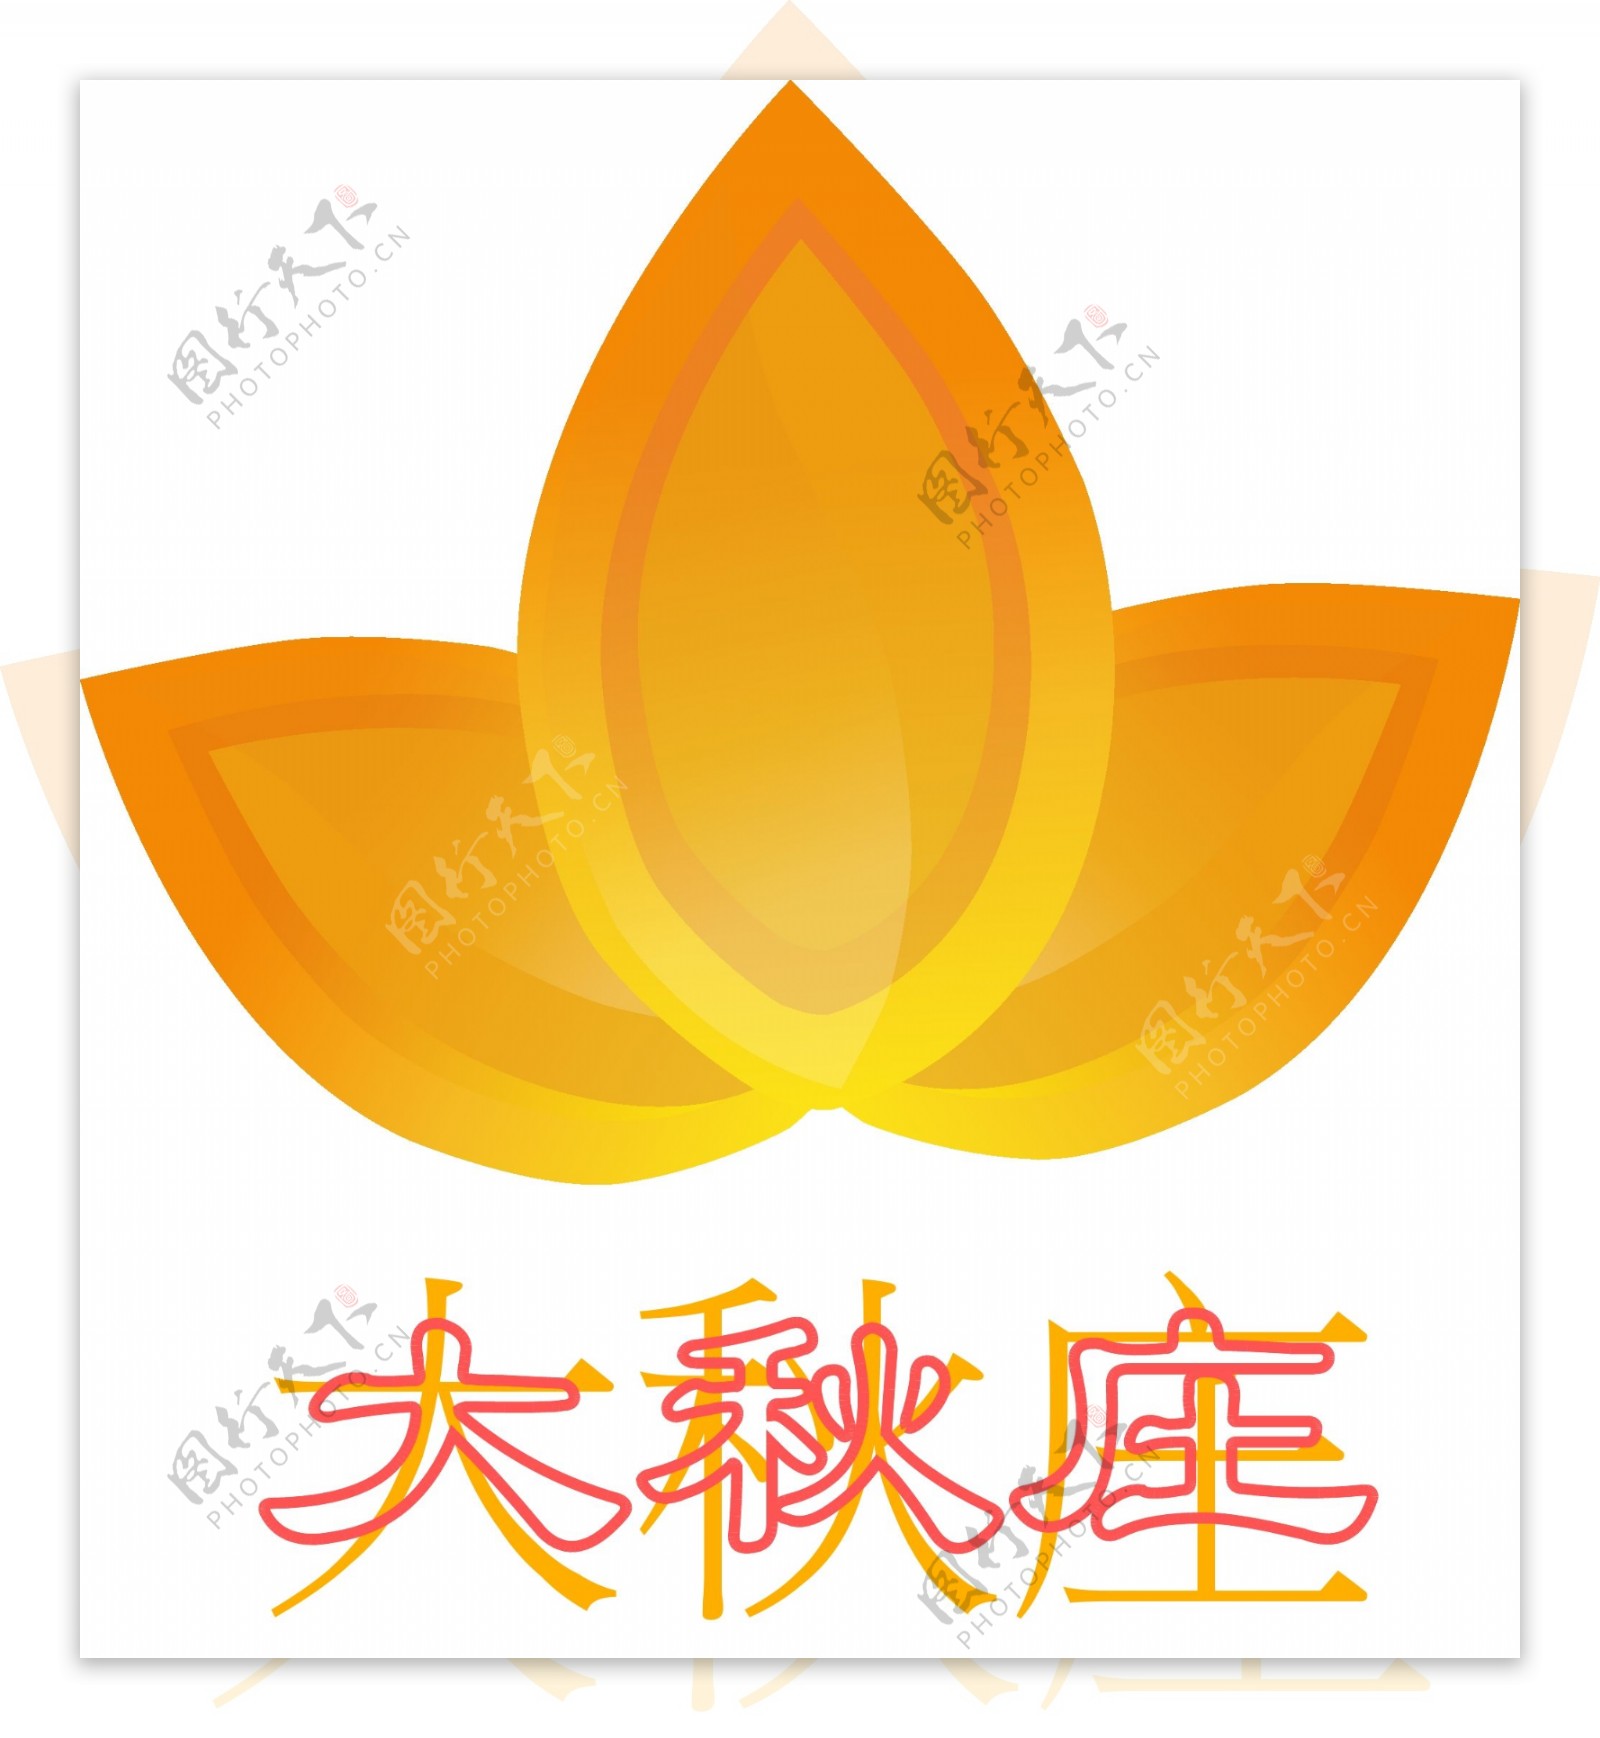 大秋庄logo